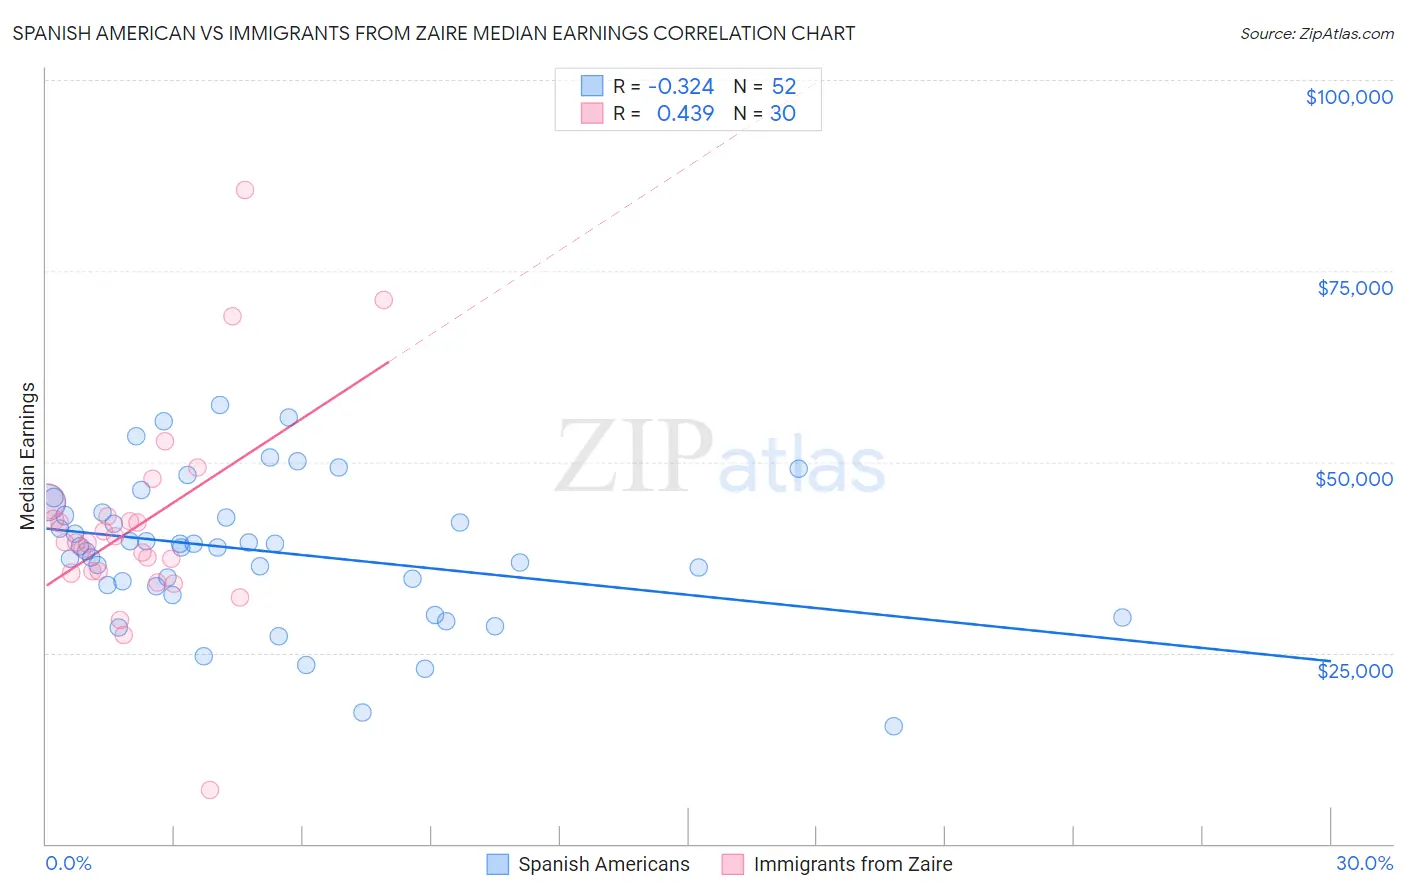 Spanish American vs Immigrants from Zaire Median Earnings